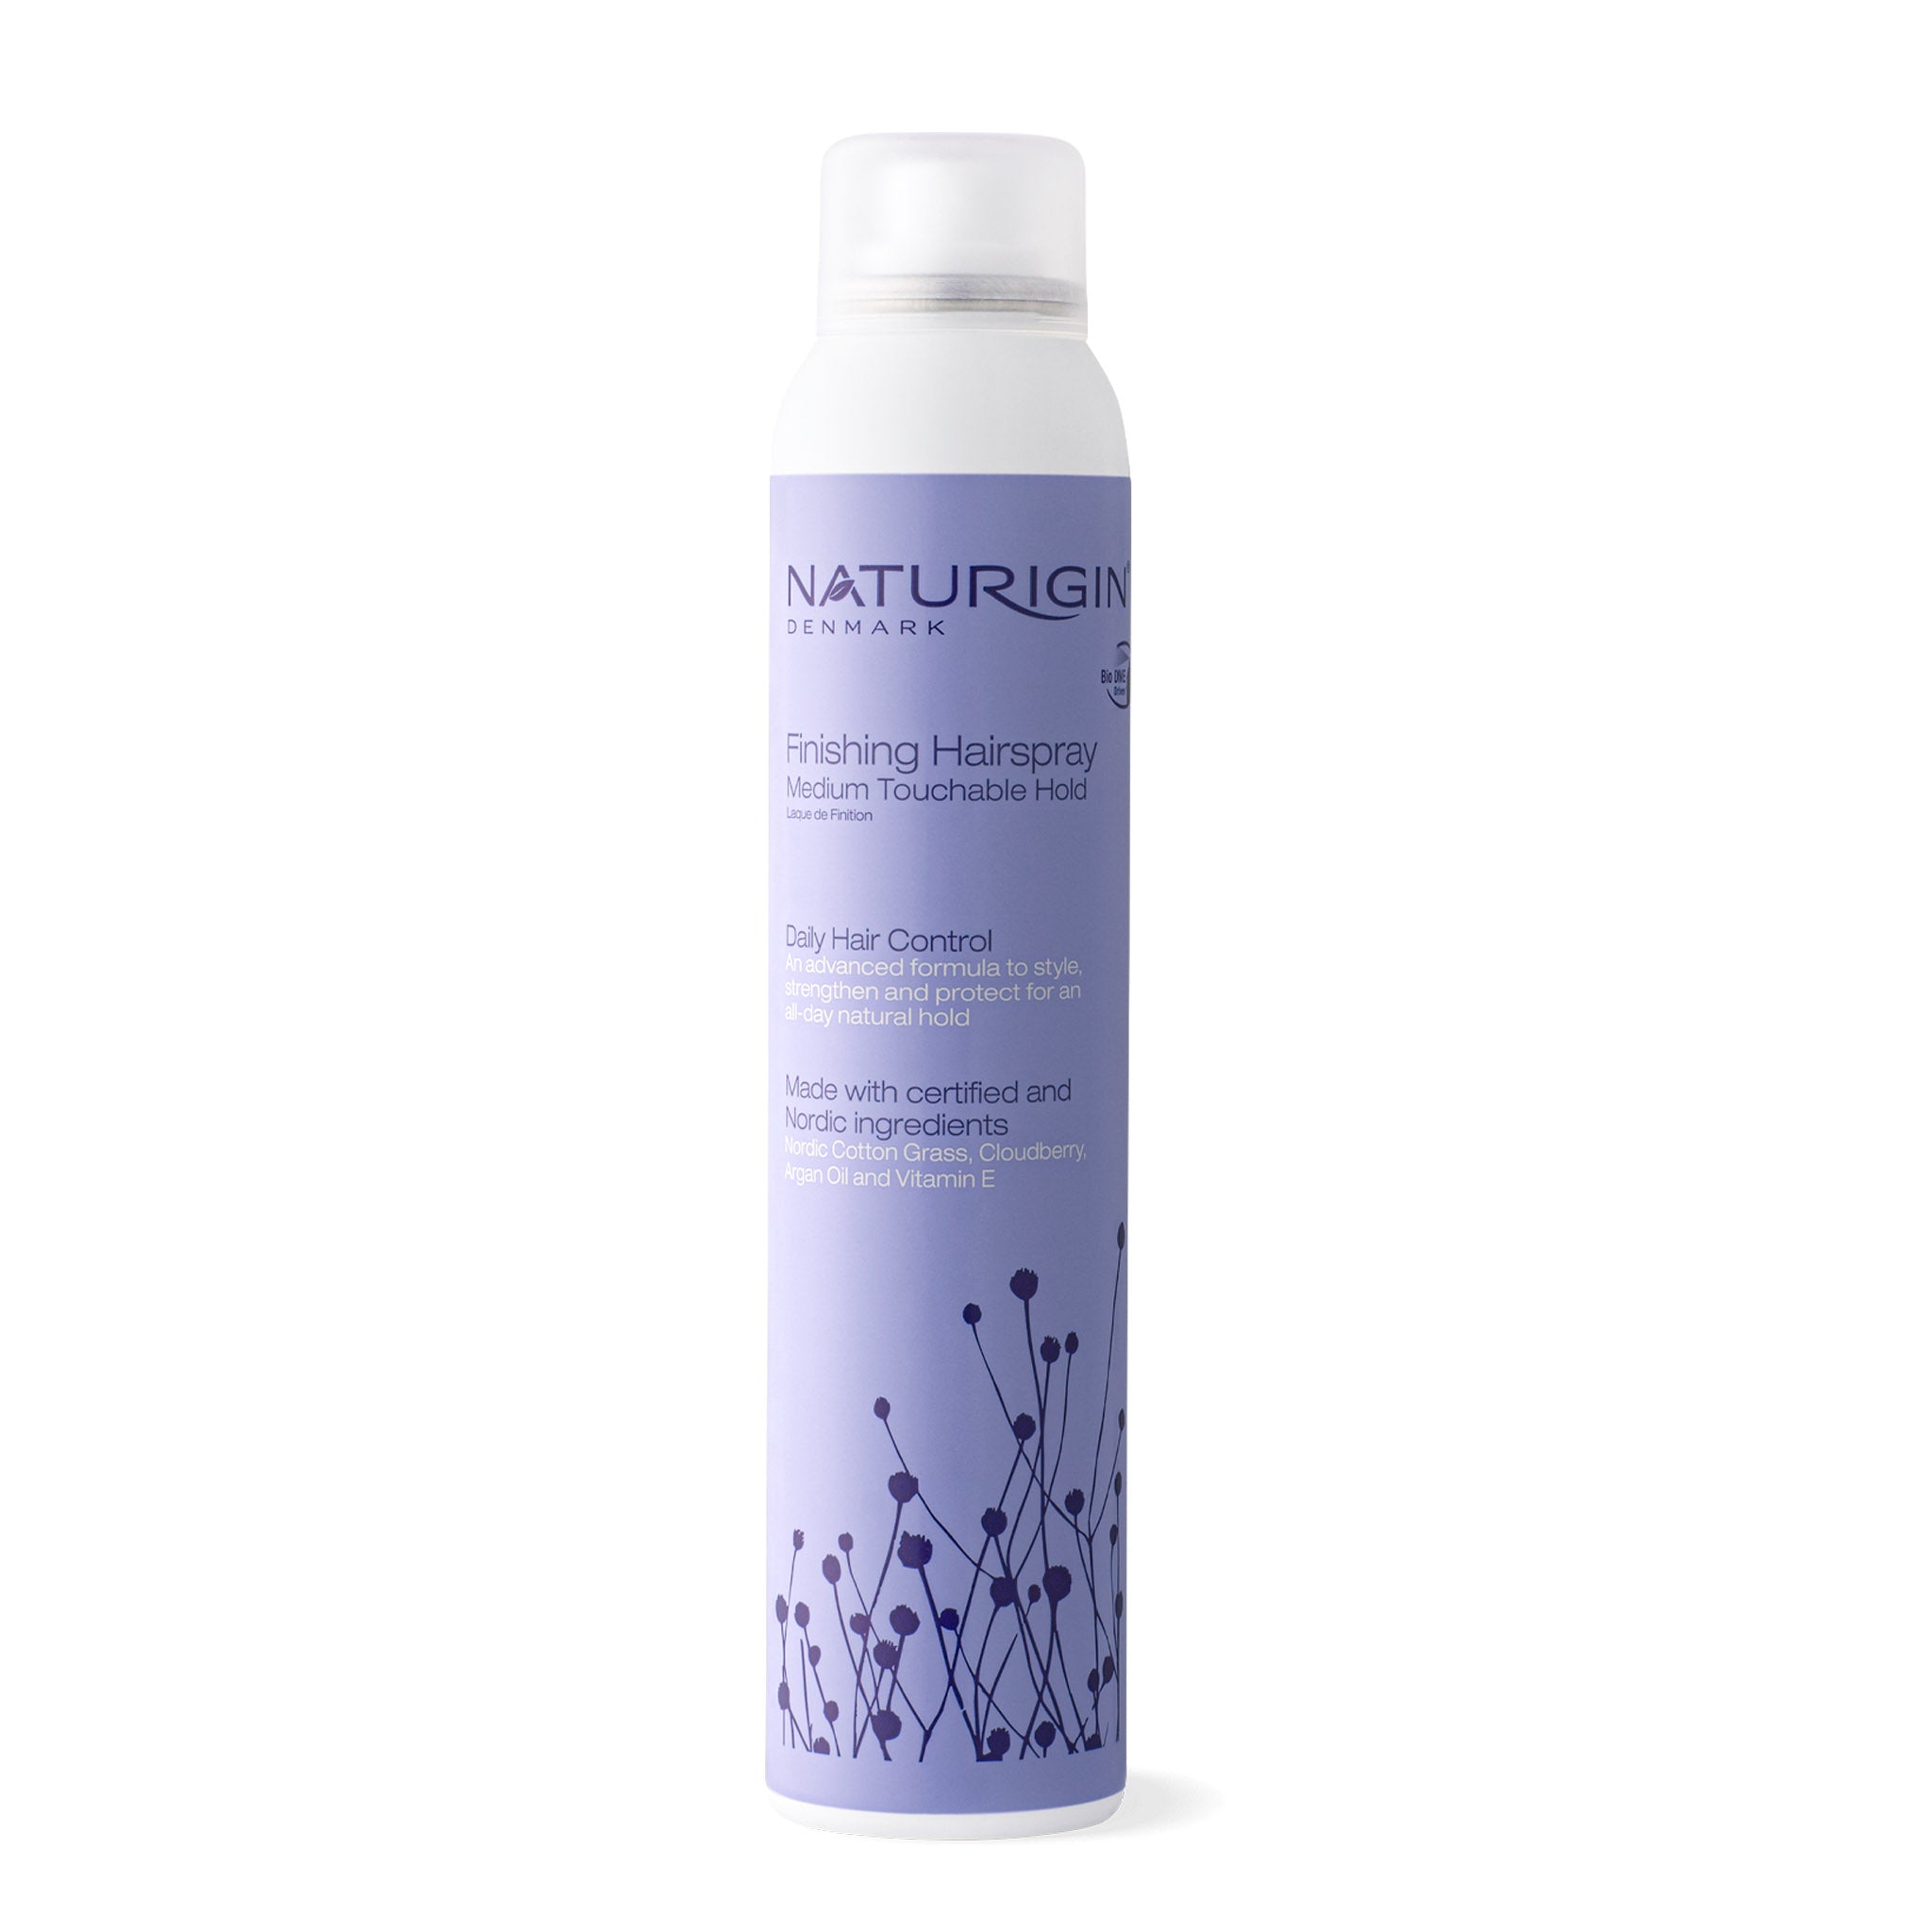 Naturigin Finishing Hairspray- Medium Touchable Hold